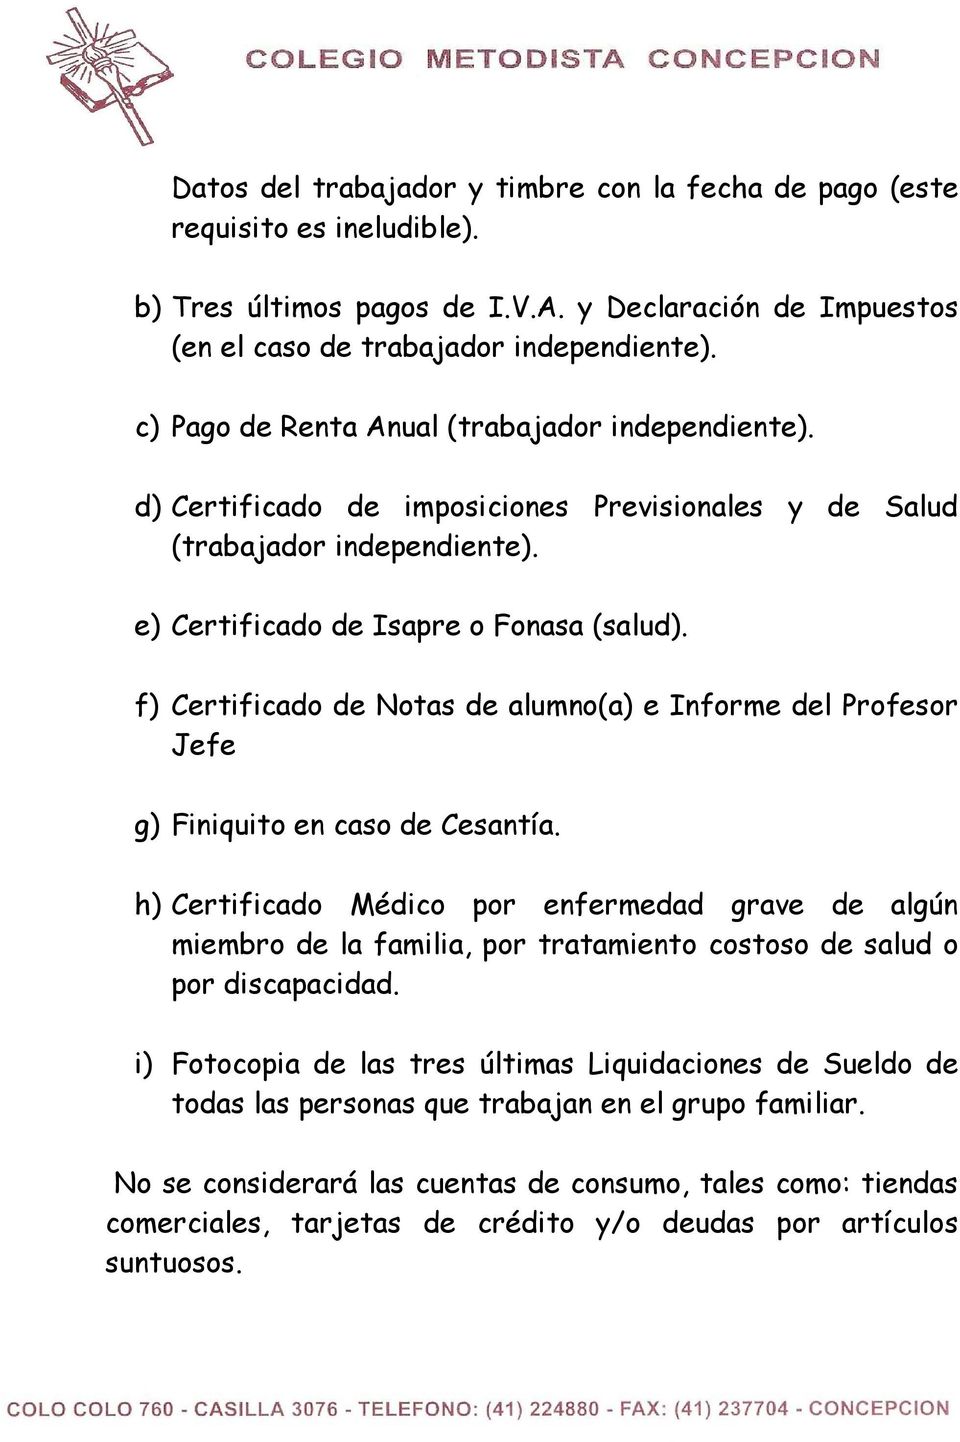 f) Certificado de Notas de alumno(a) e Informe del Profesor Jefe g) Finiquito en caso de Cesantía.